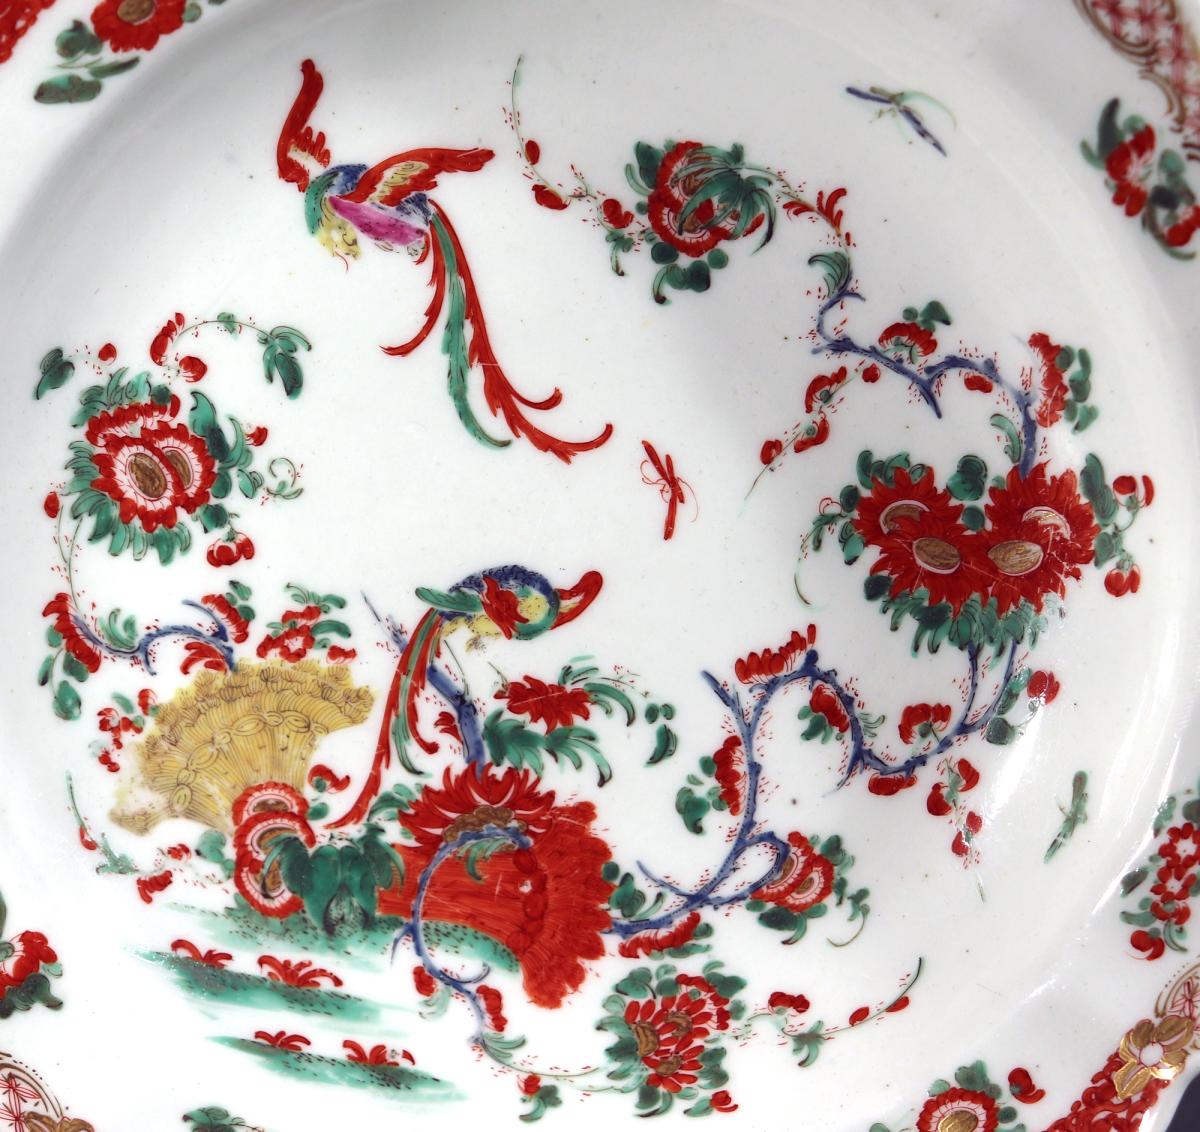 First Period Worcester Porcelain "Phoenix" Pattern Dessert Plate, Circa 1770